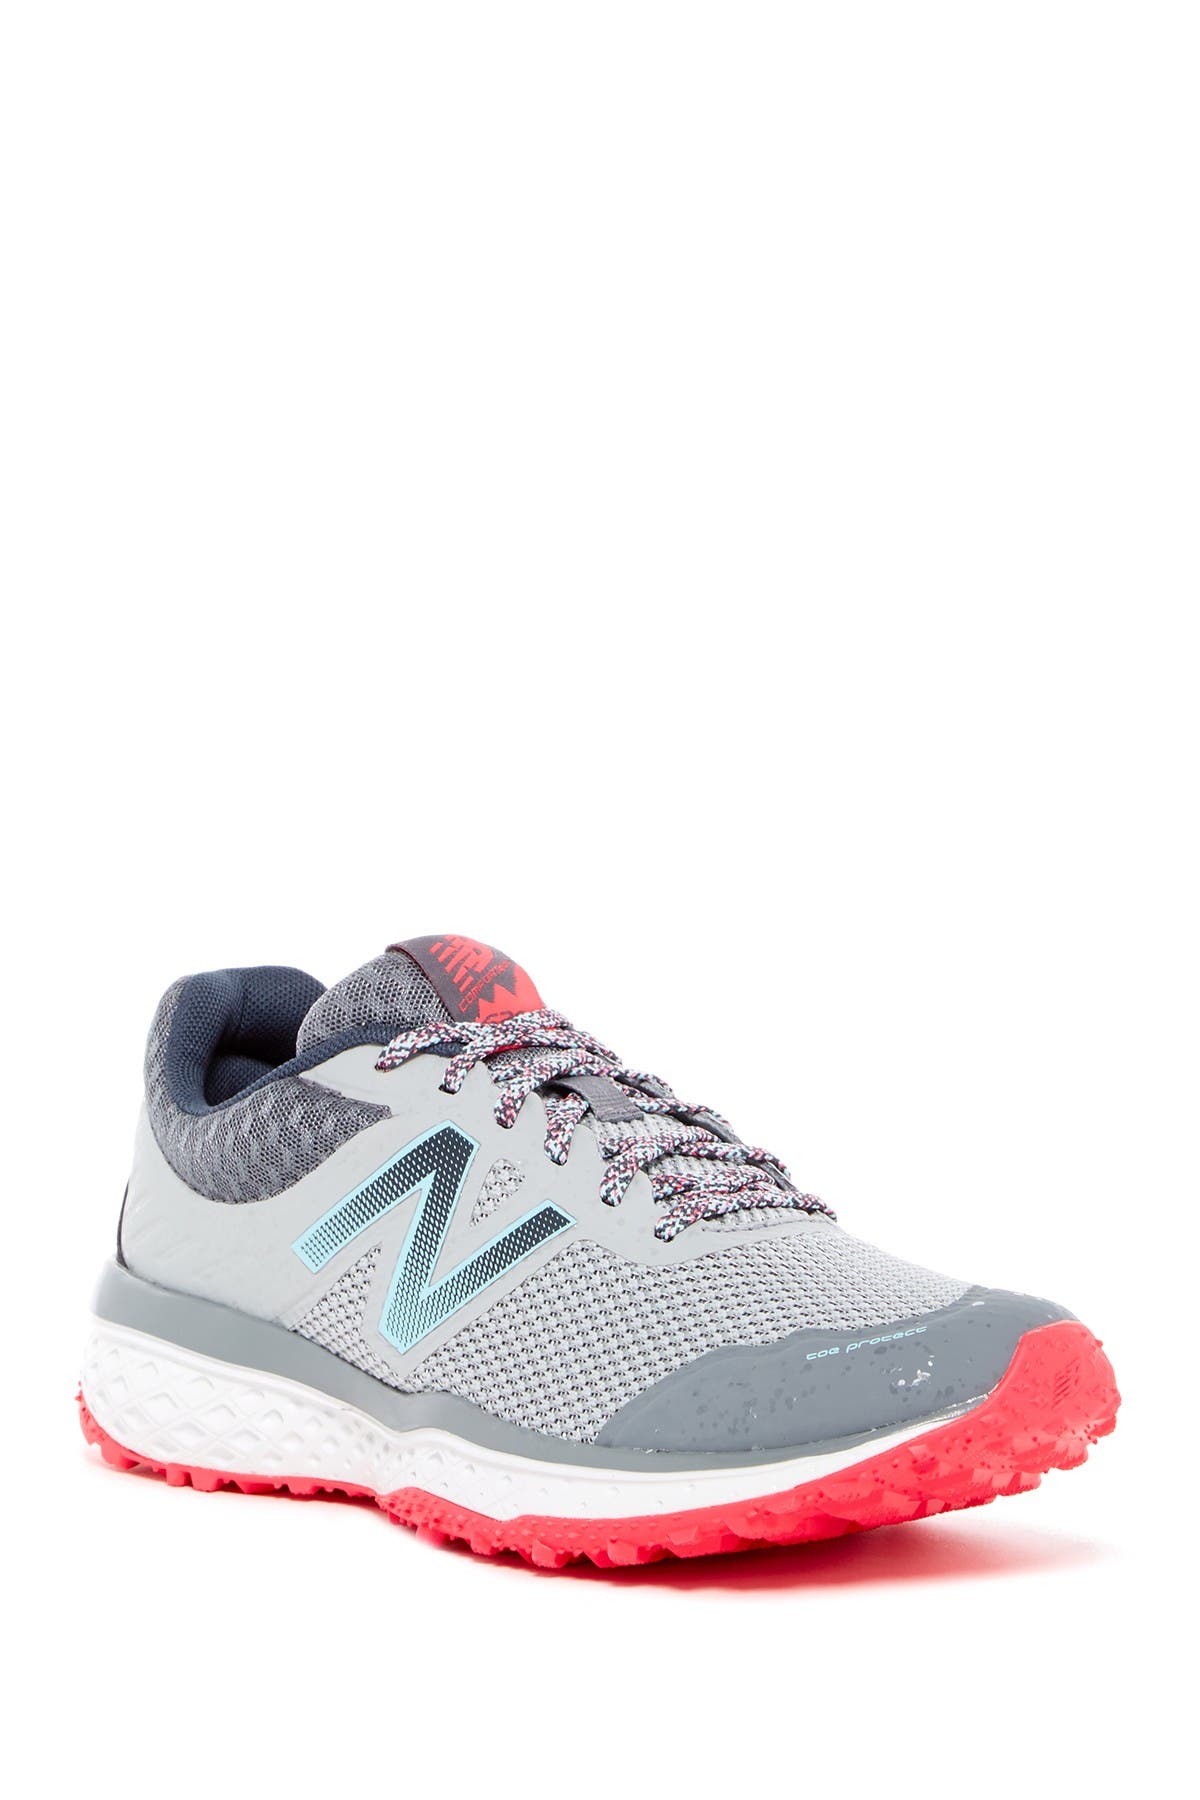 New Balance | 620v2 Trail Running Shoe 